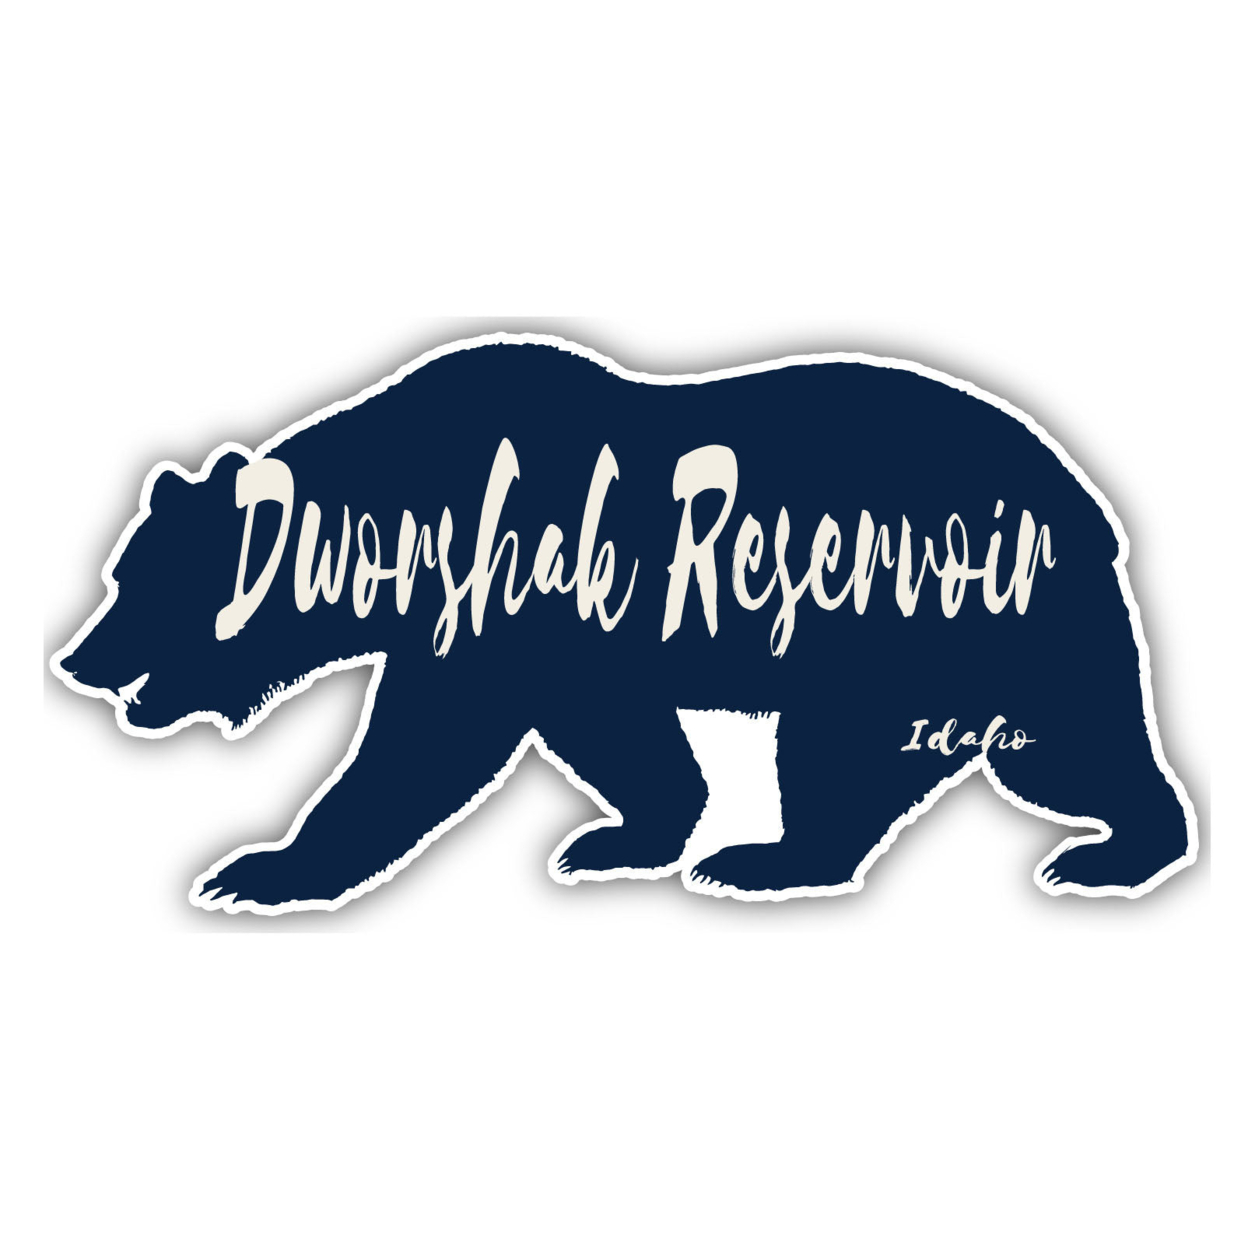 Dworshak Reservoir Idaho Souvenir Decorative Stickers (Choose Theme And Size) - Single Unit, 12-Inch, Camp Life